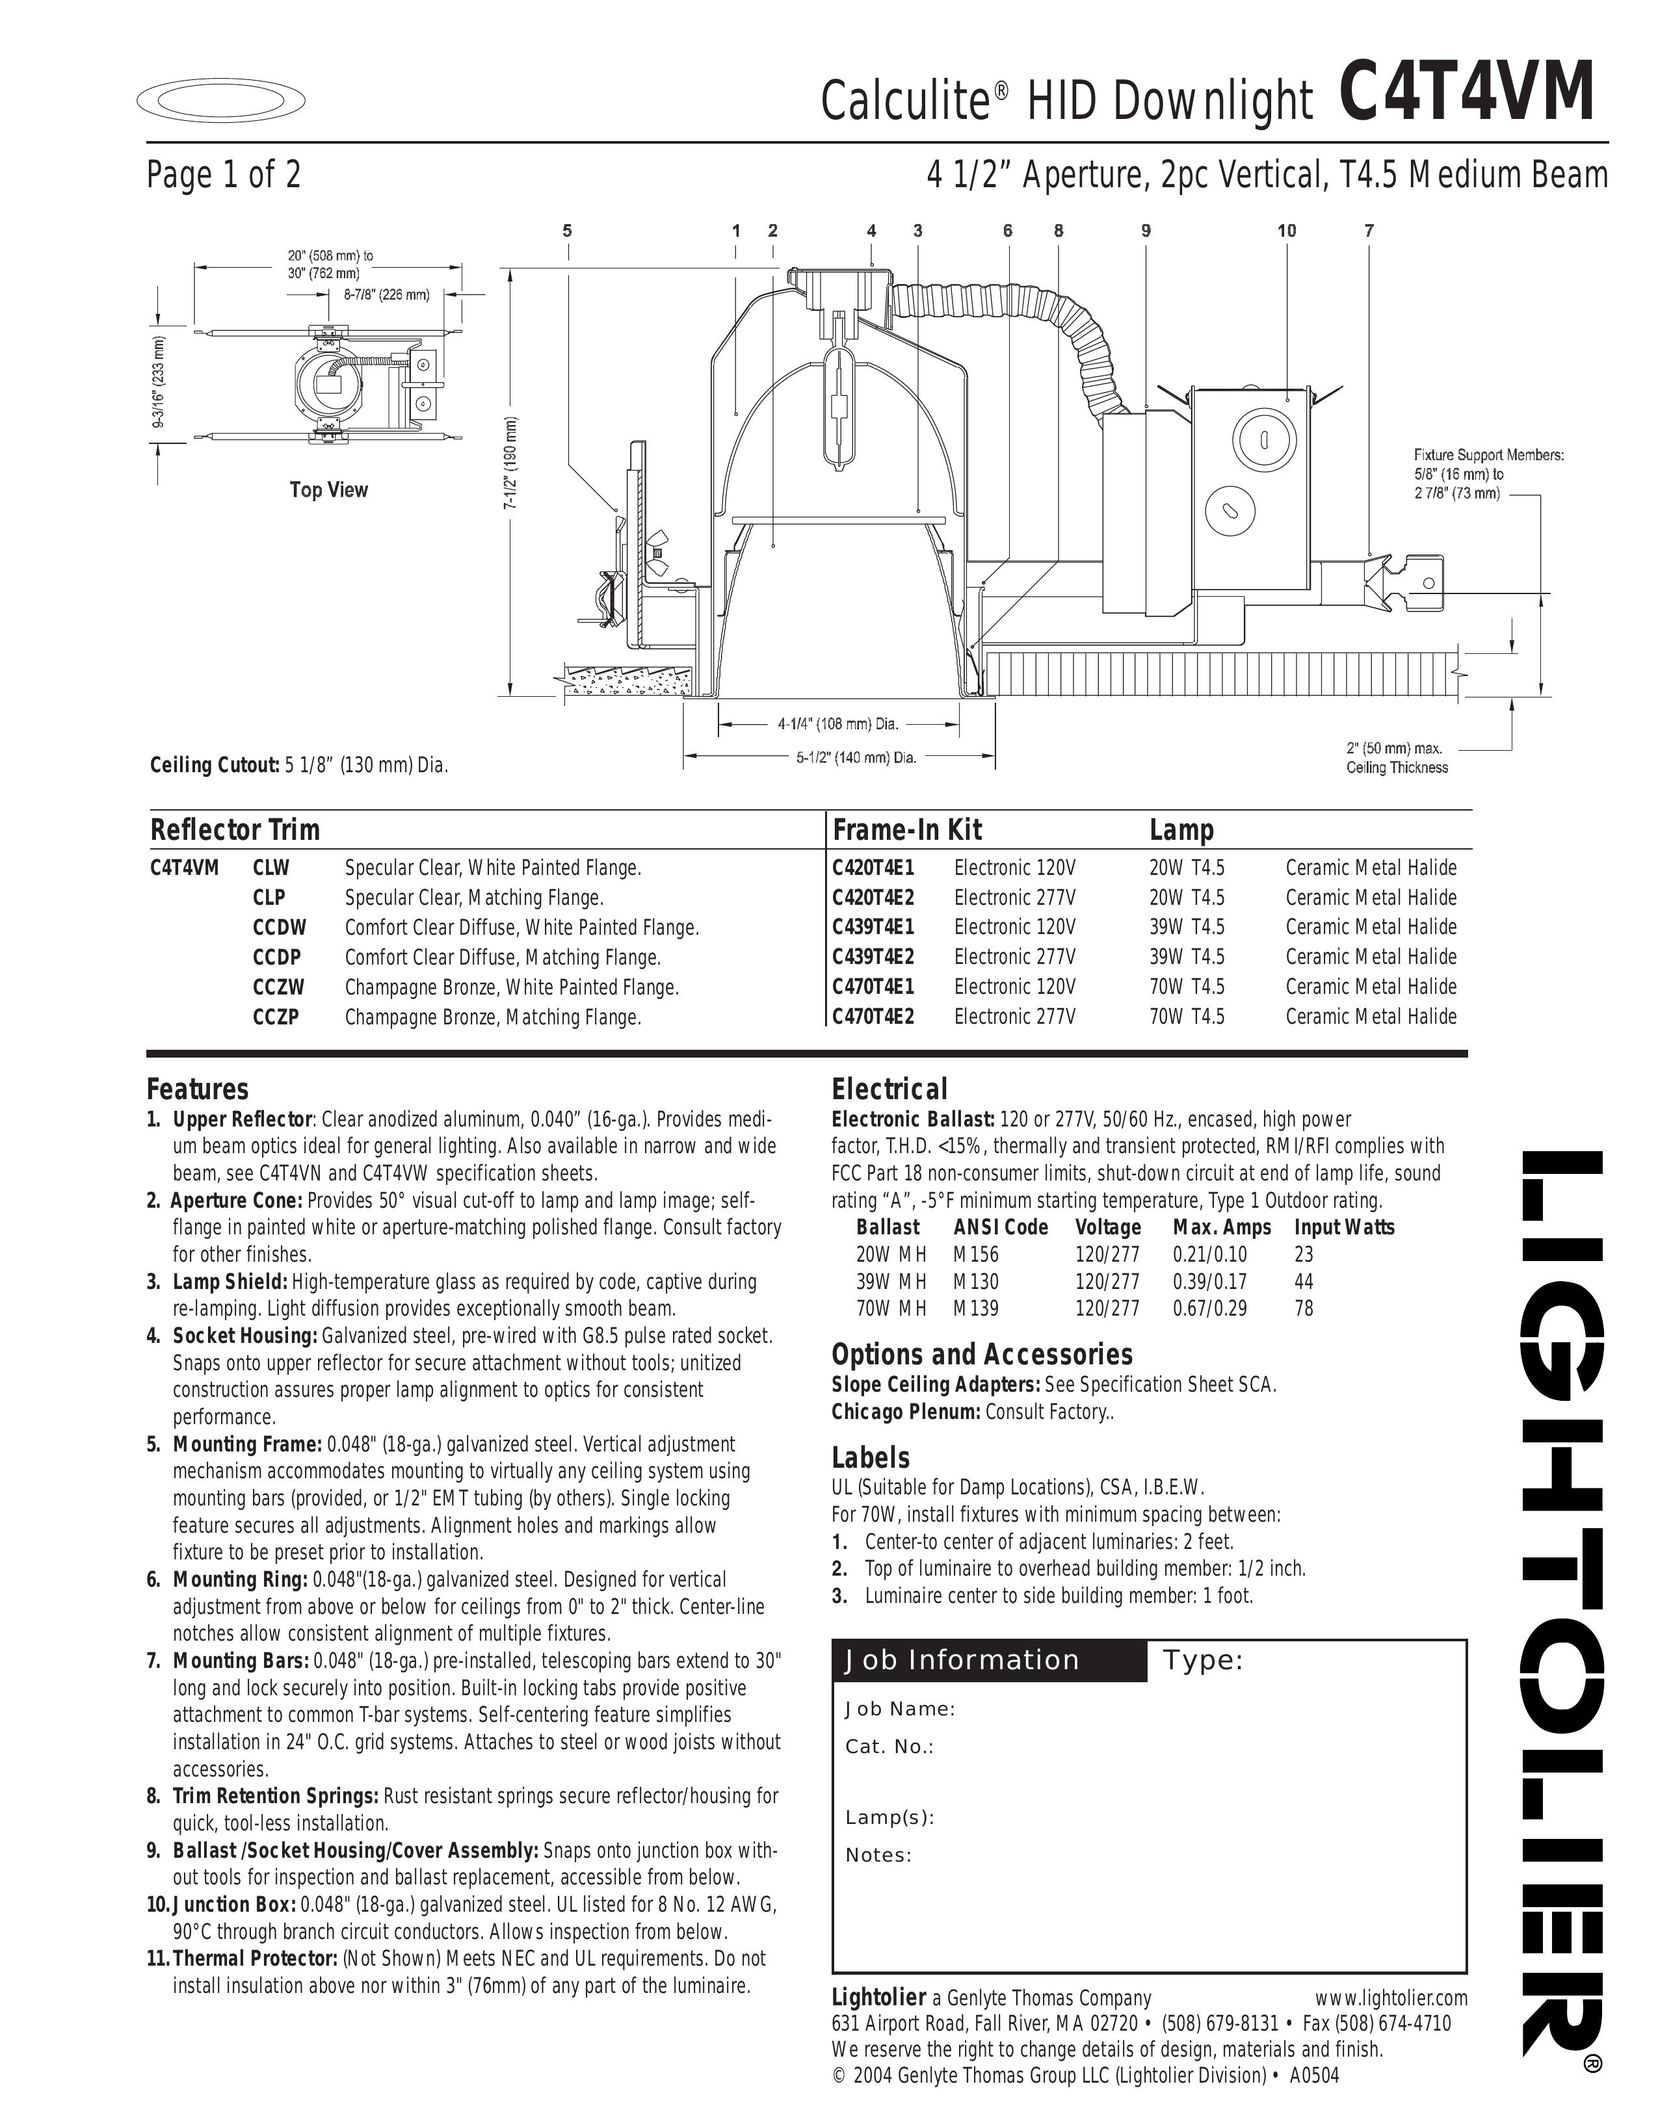 Lightolier C4T4VM Work Light User Manual